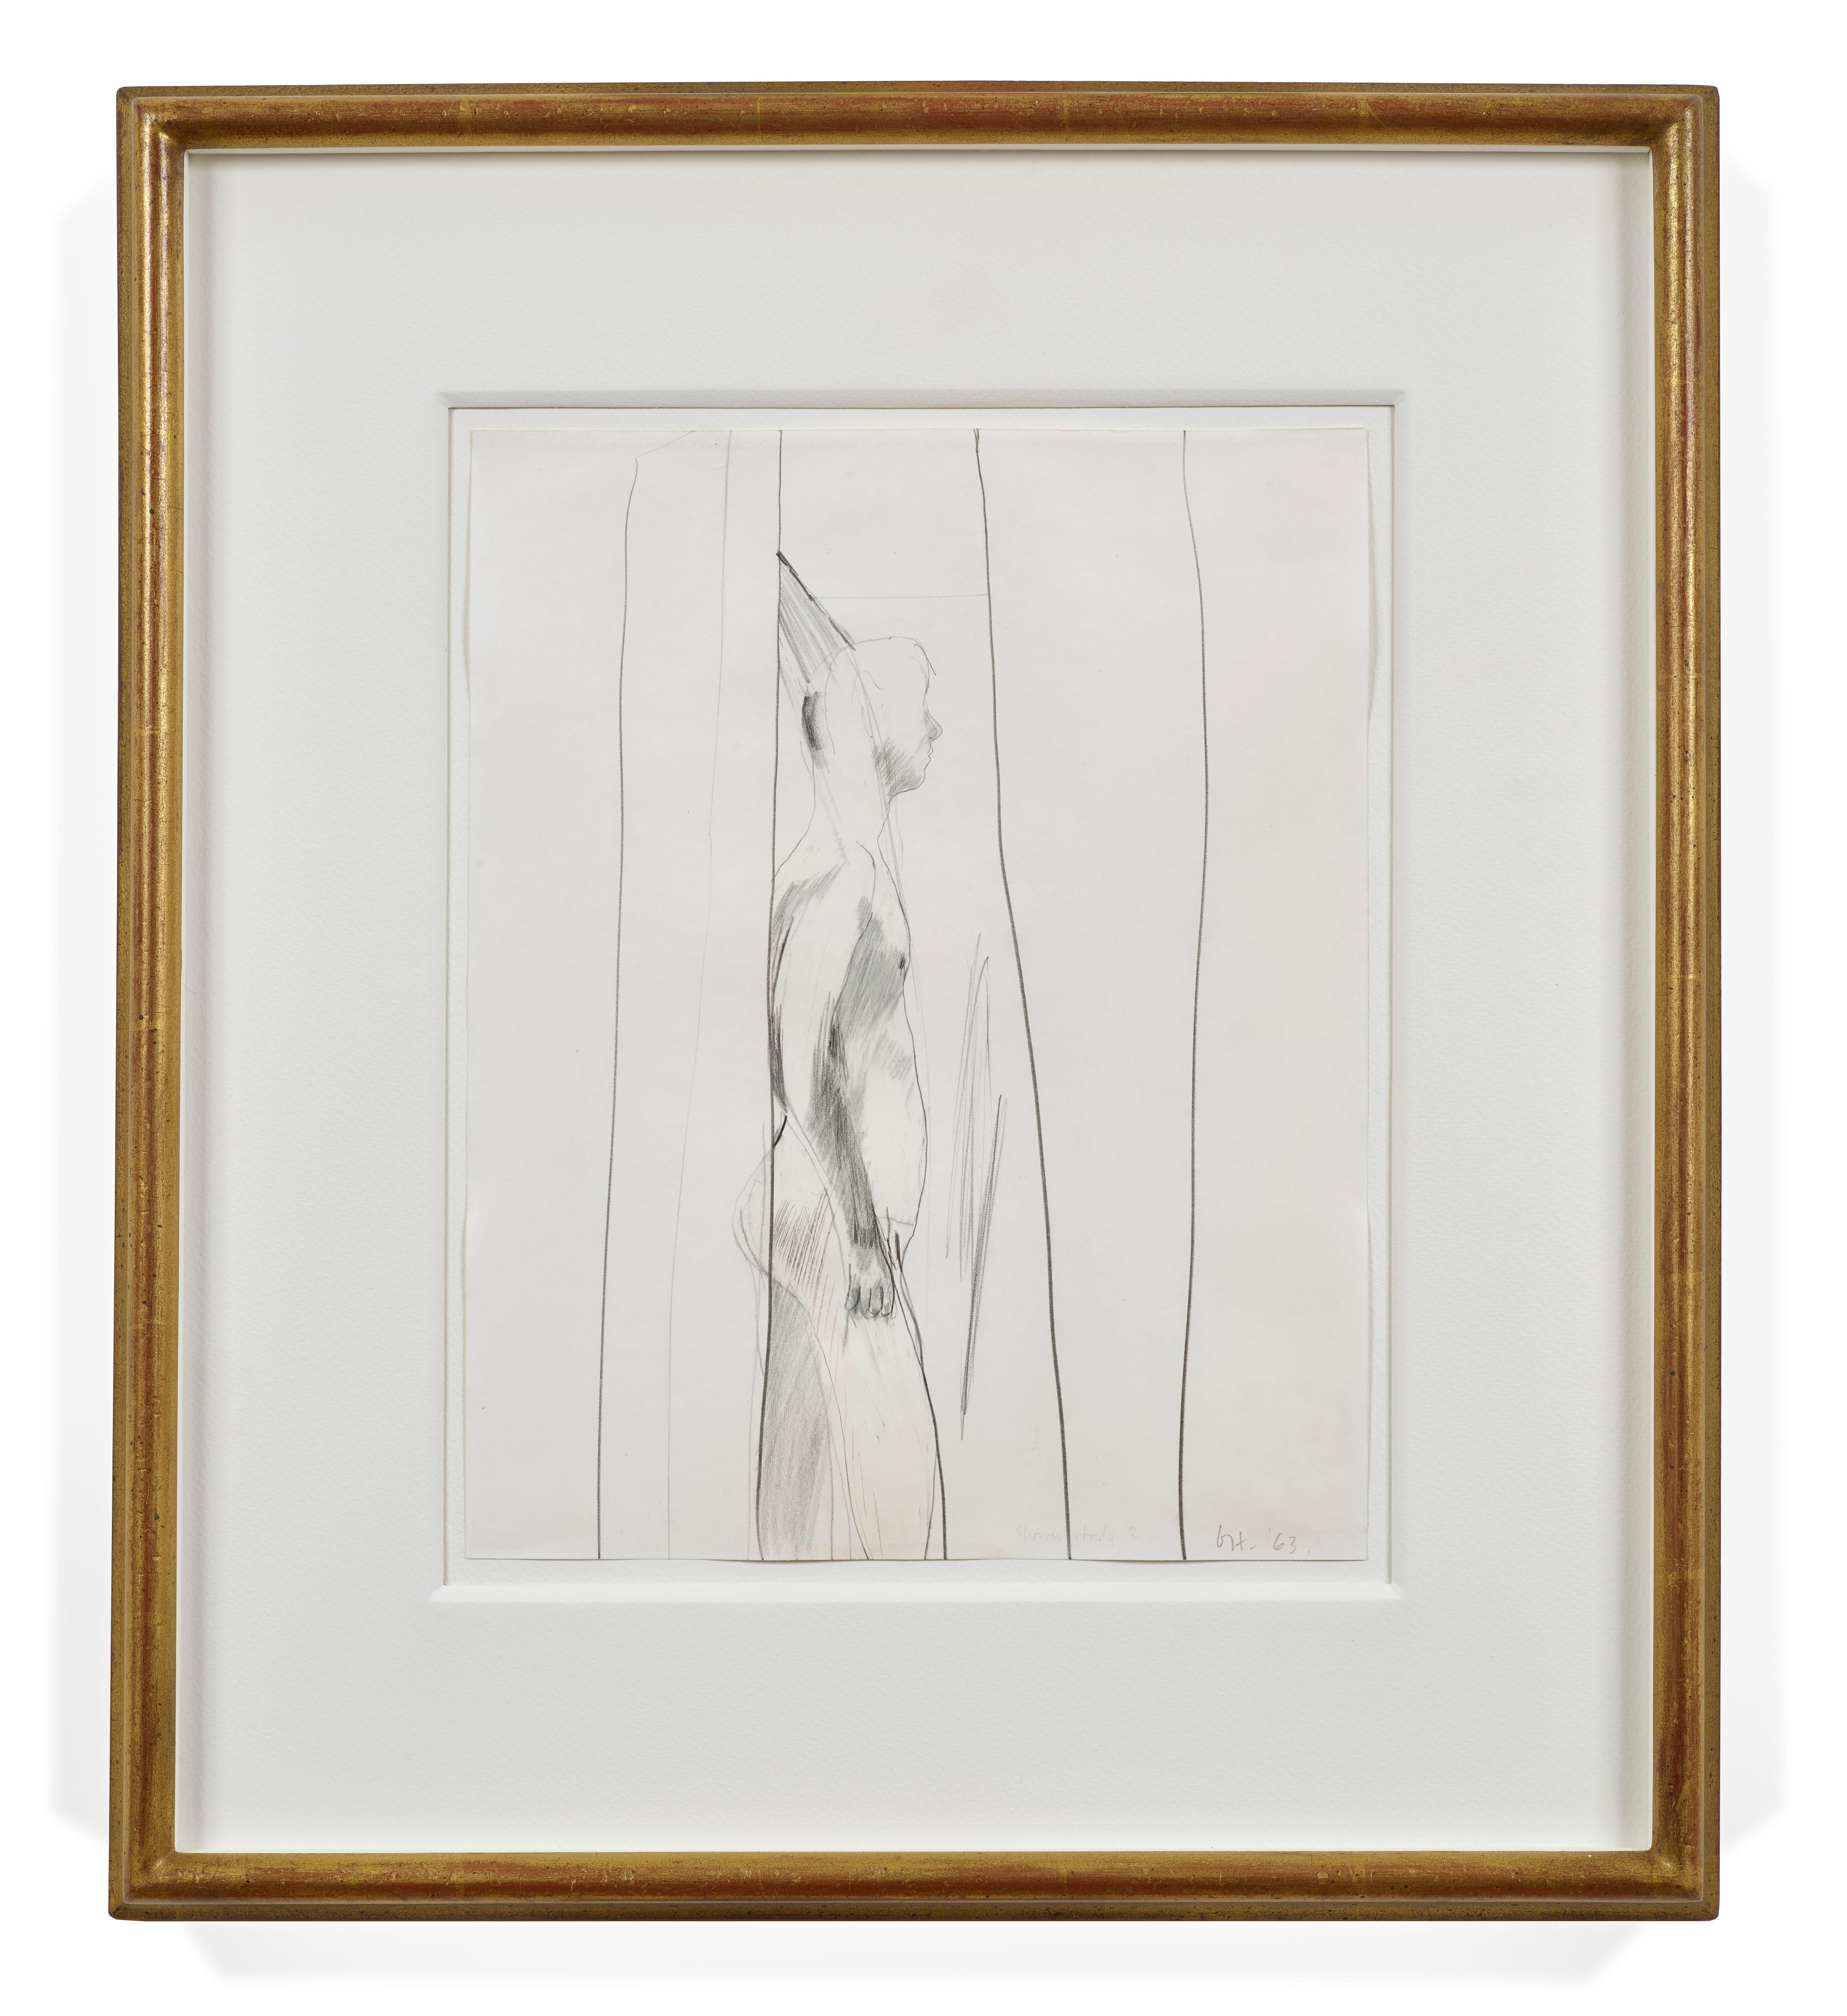 Shower Study II, 20th Century, David Hockney, Drawing, Modern British